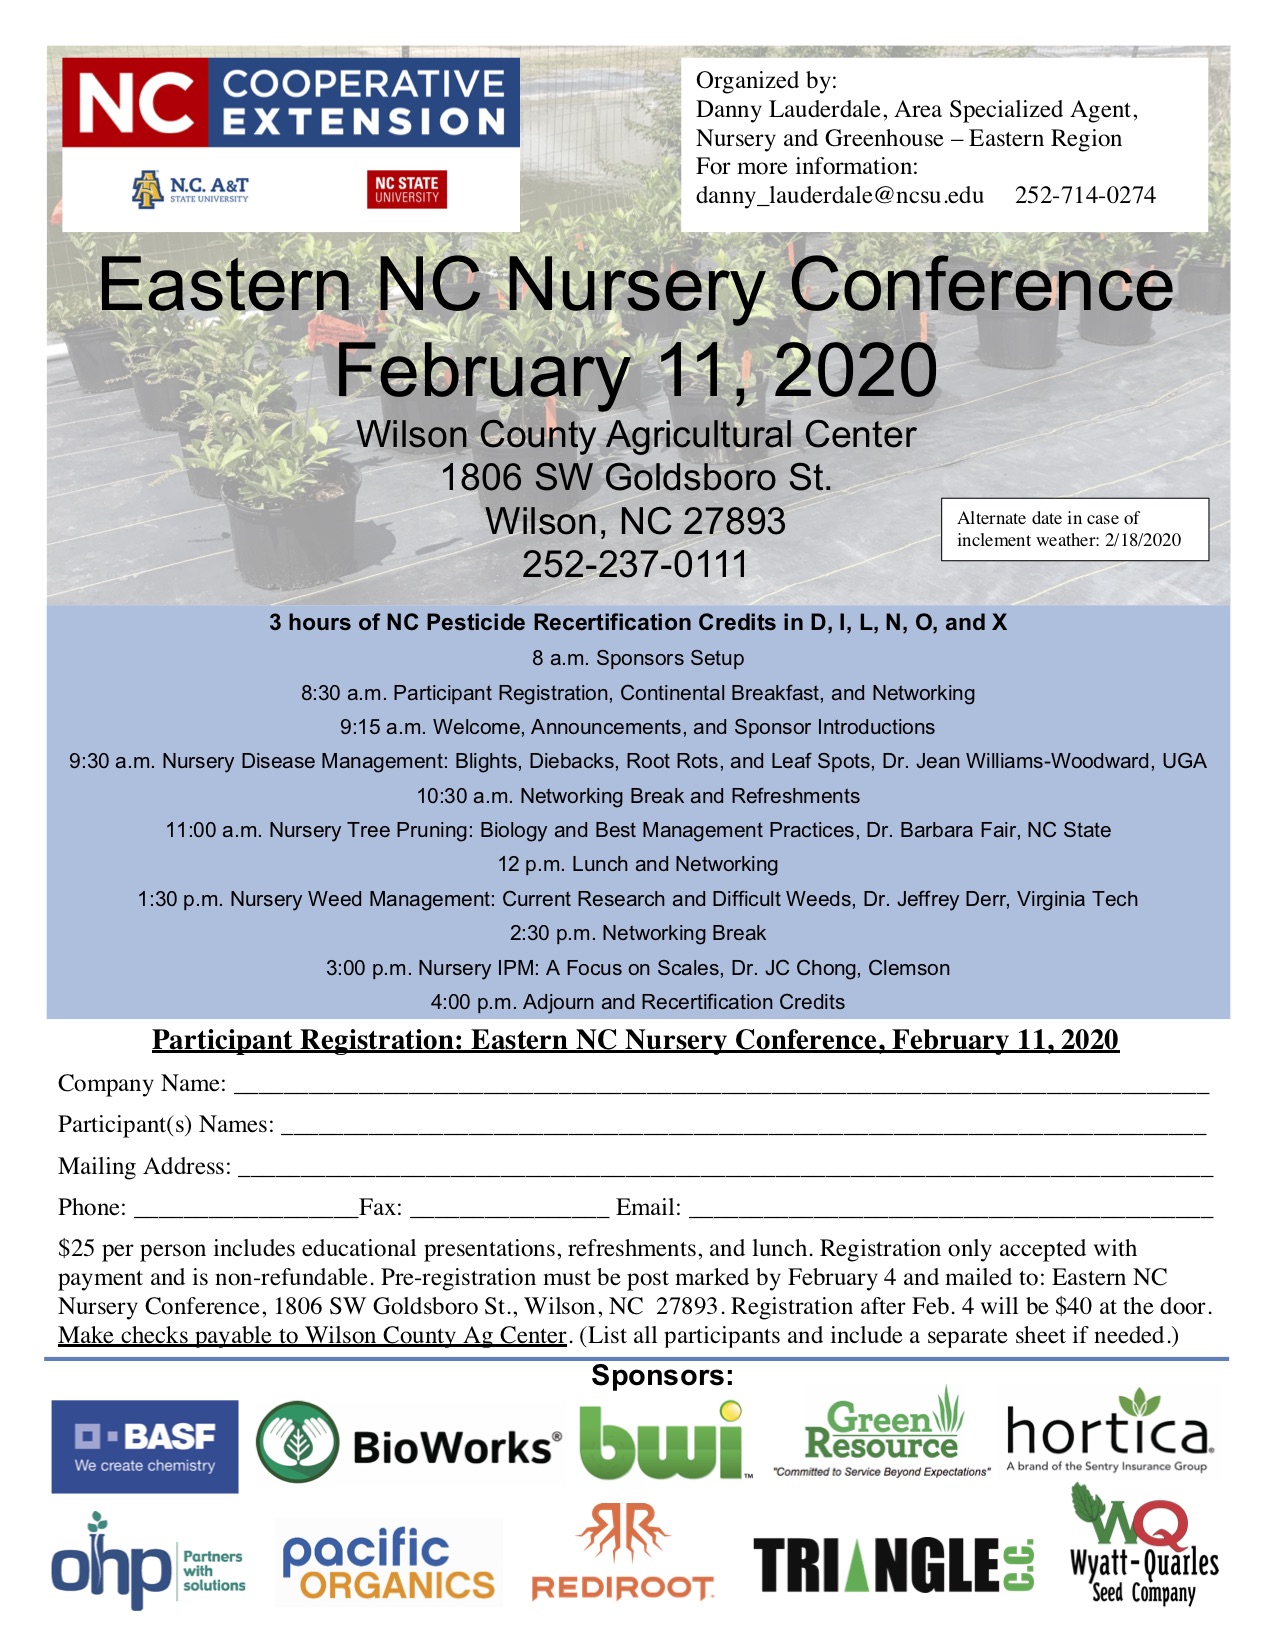 Eastern NC Nursery Conference flyer